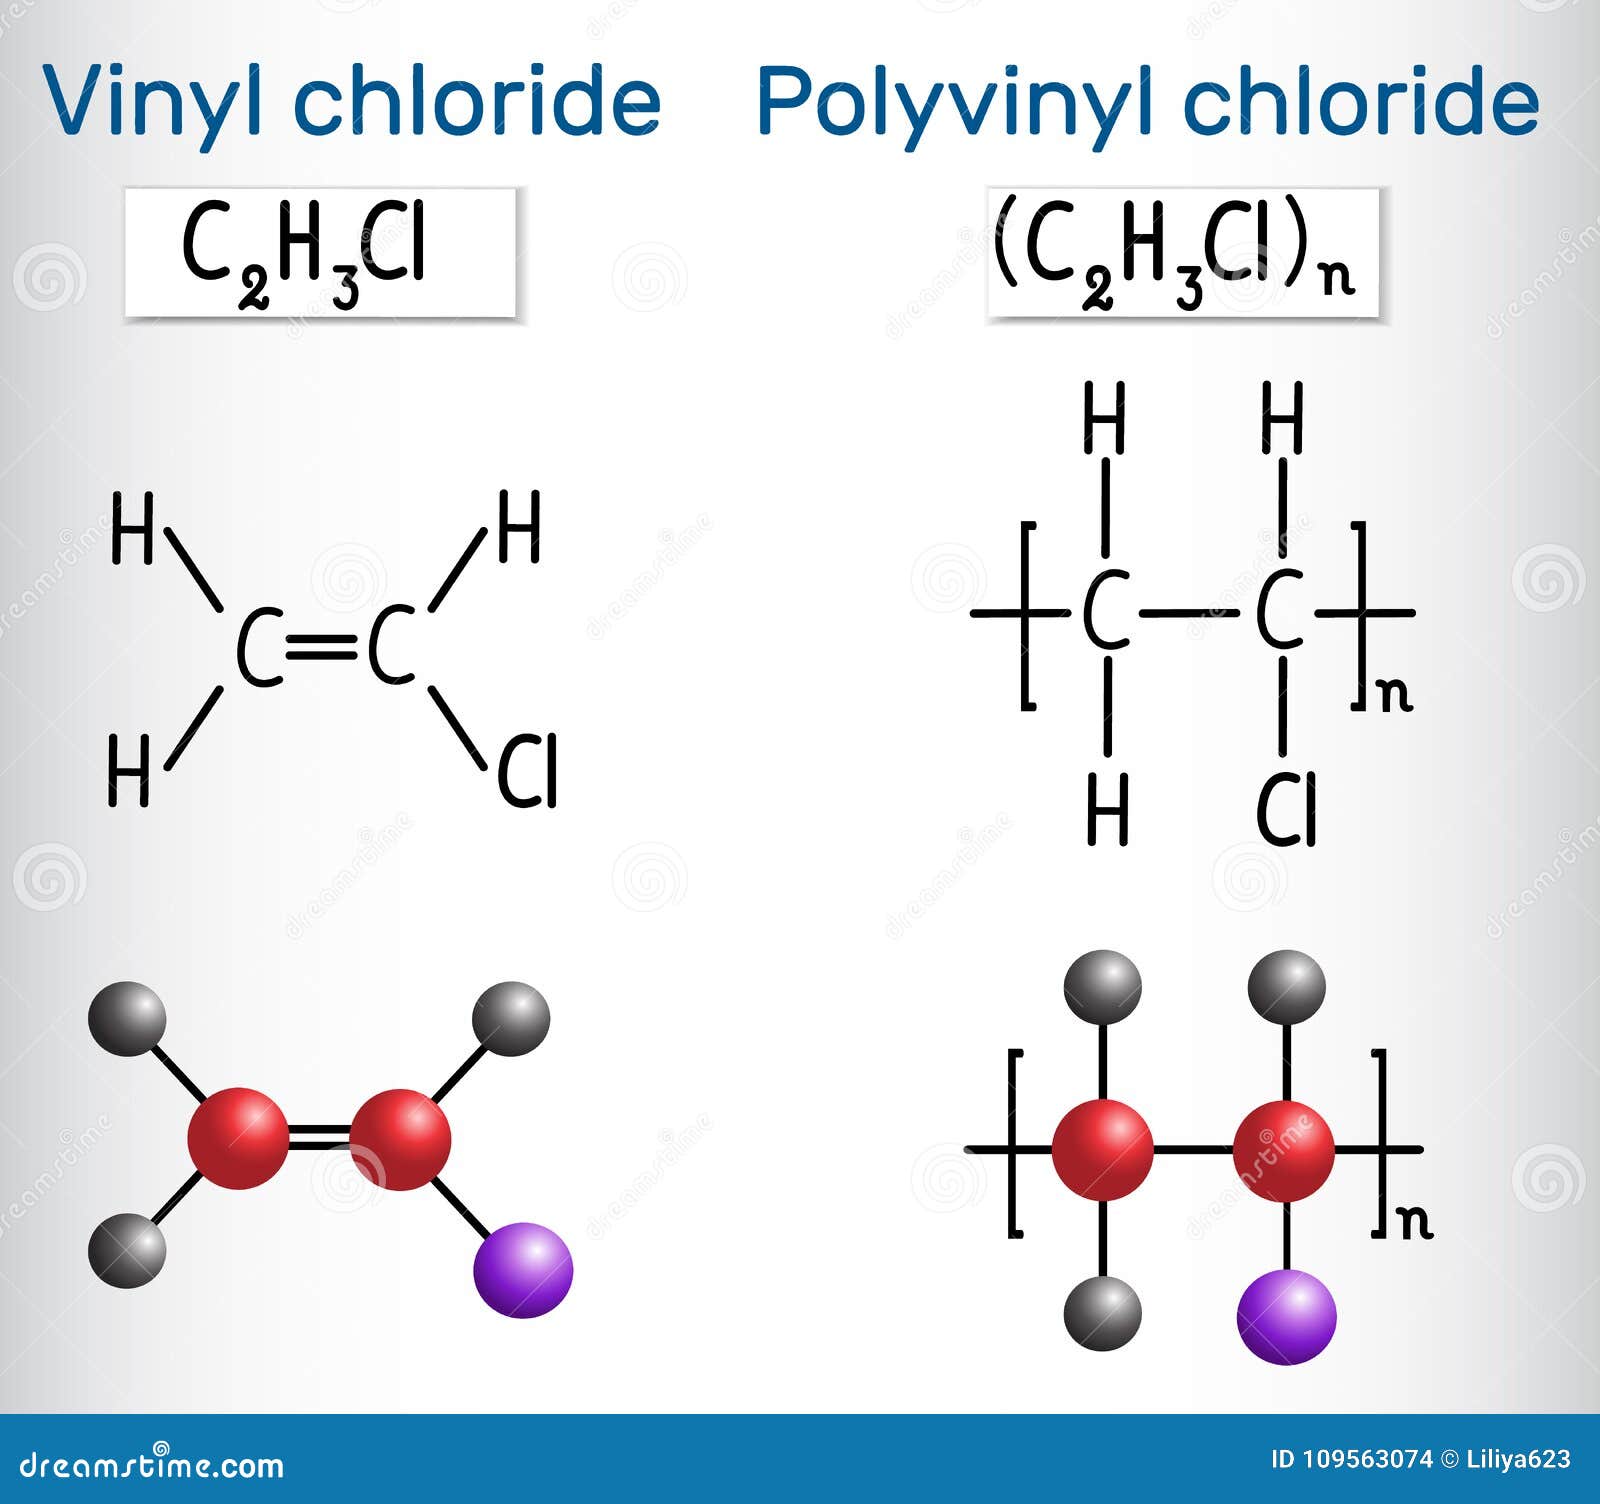 polyvinyl chloride pvc and vinyl chloride monomer molecule. st